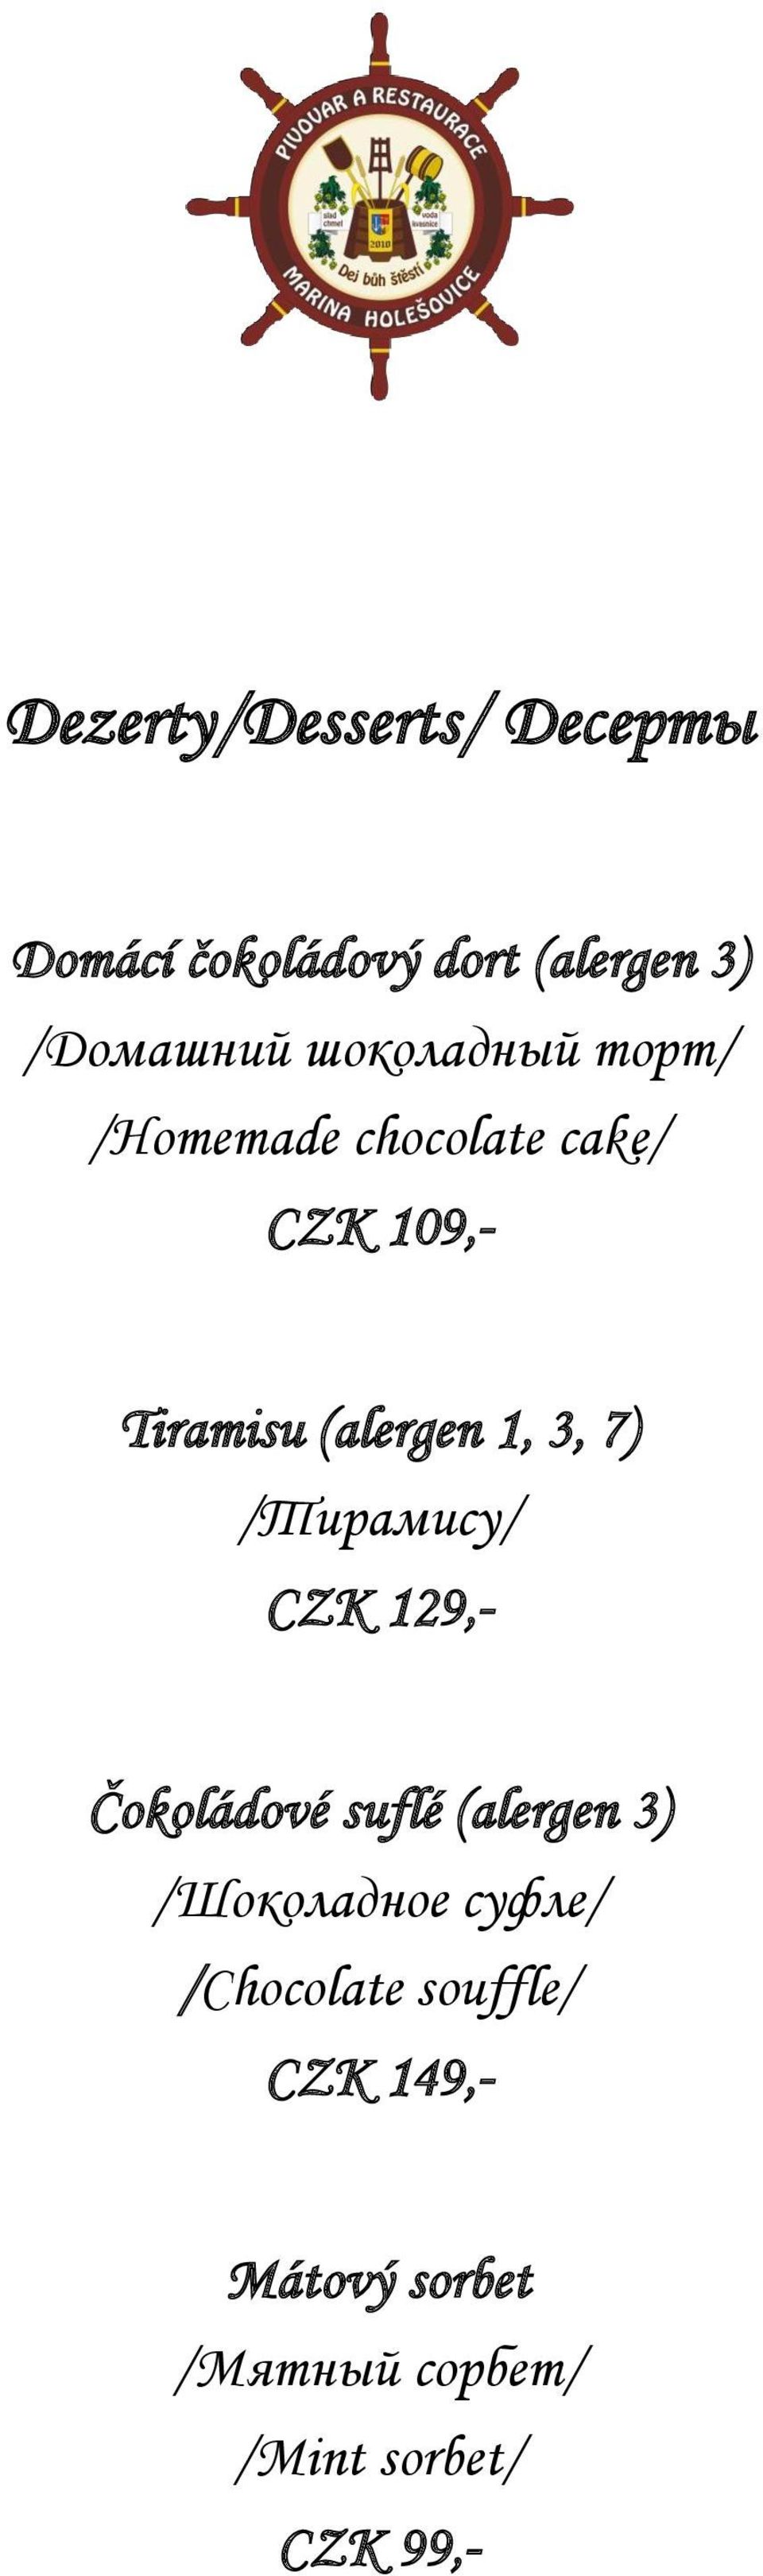 3, 7) /Тирамису/ CZK 129,- Čokoládové suflé (alergen 3) /Шоколадное суфле/